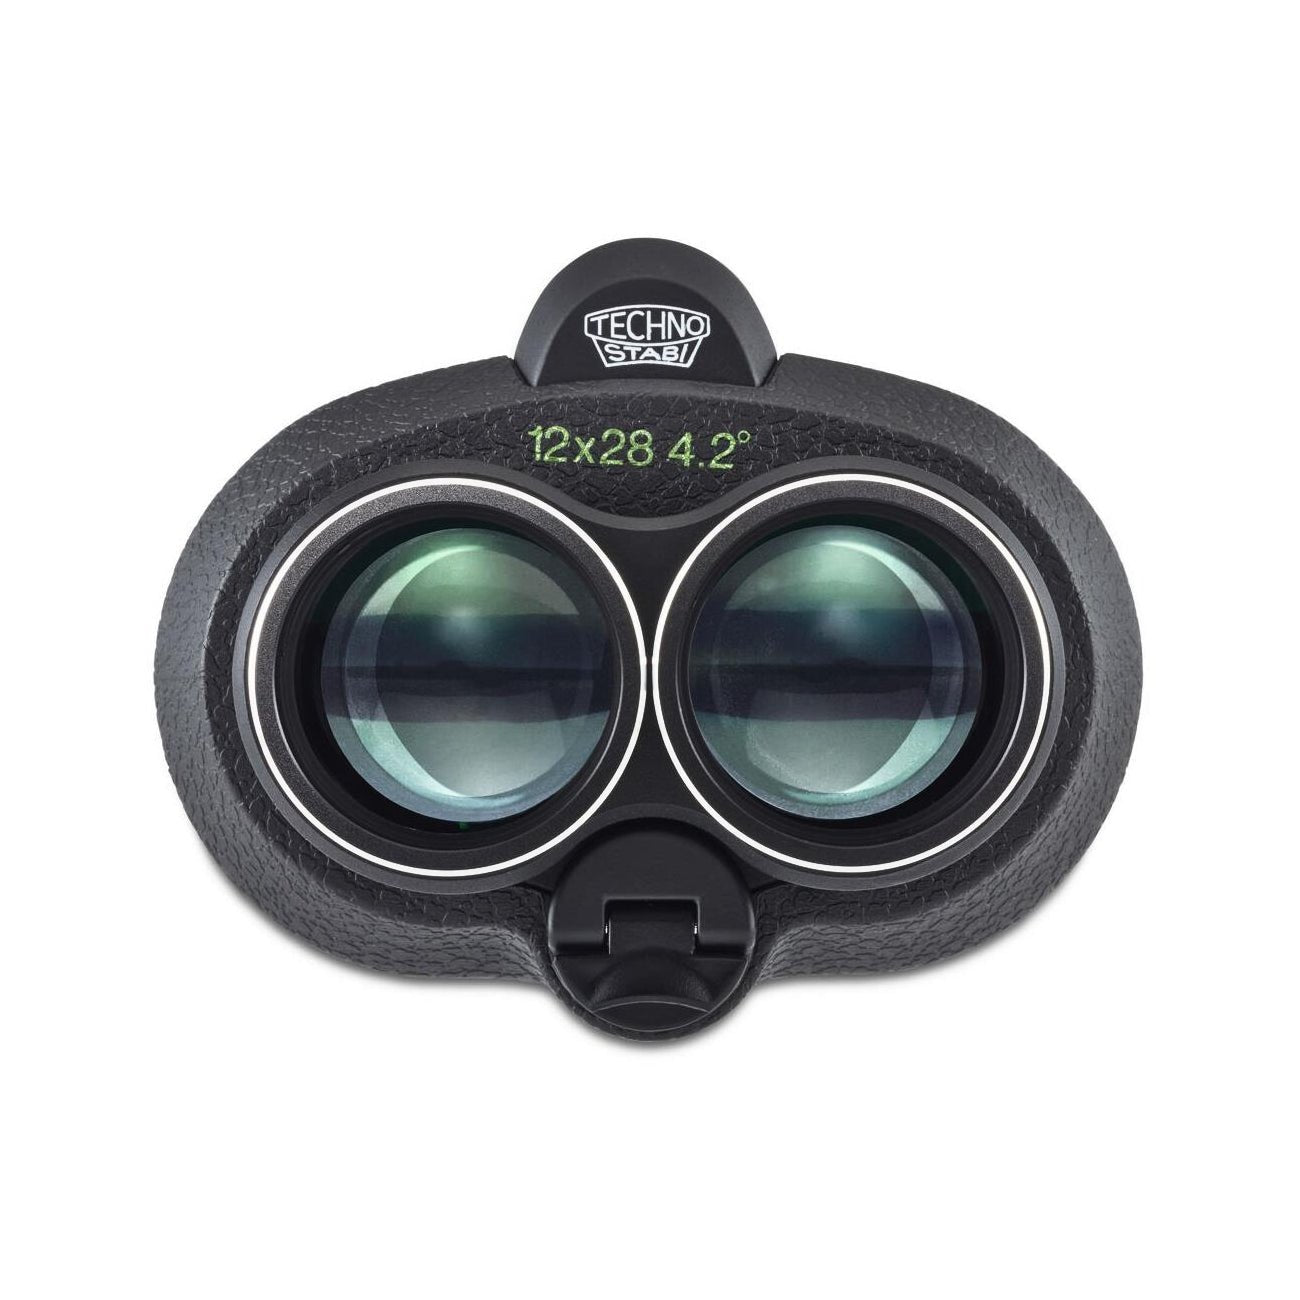 Fujinon Techno-Stabi Waterproof Image-Stabilized Binoculars